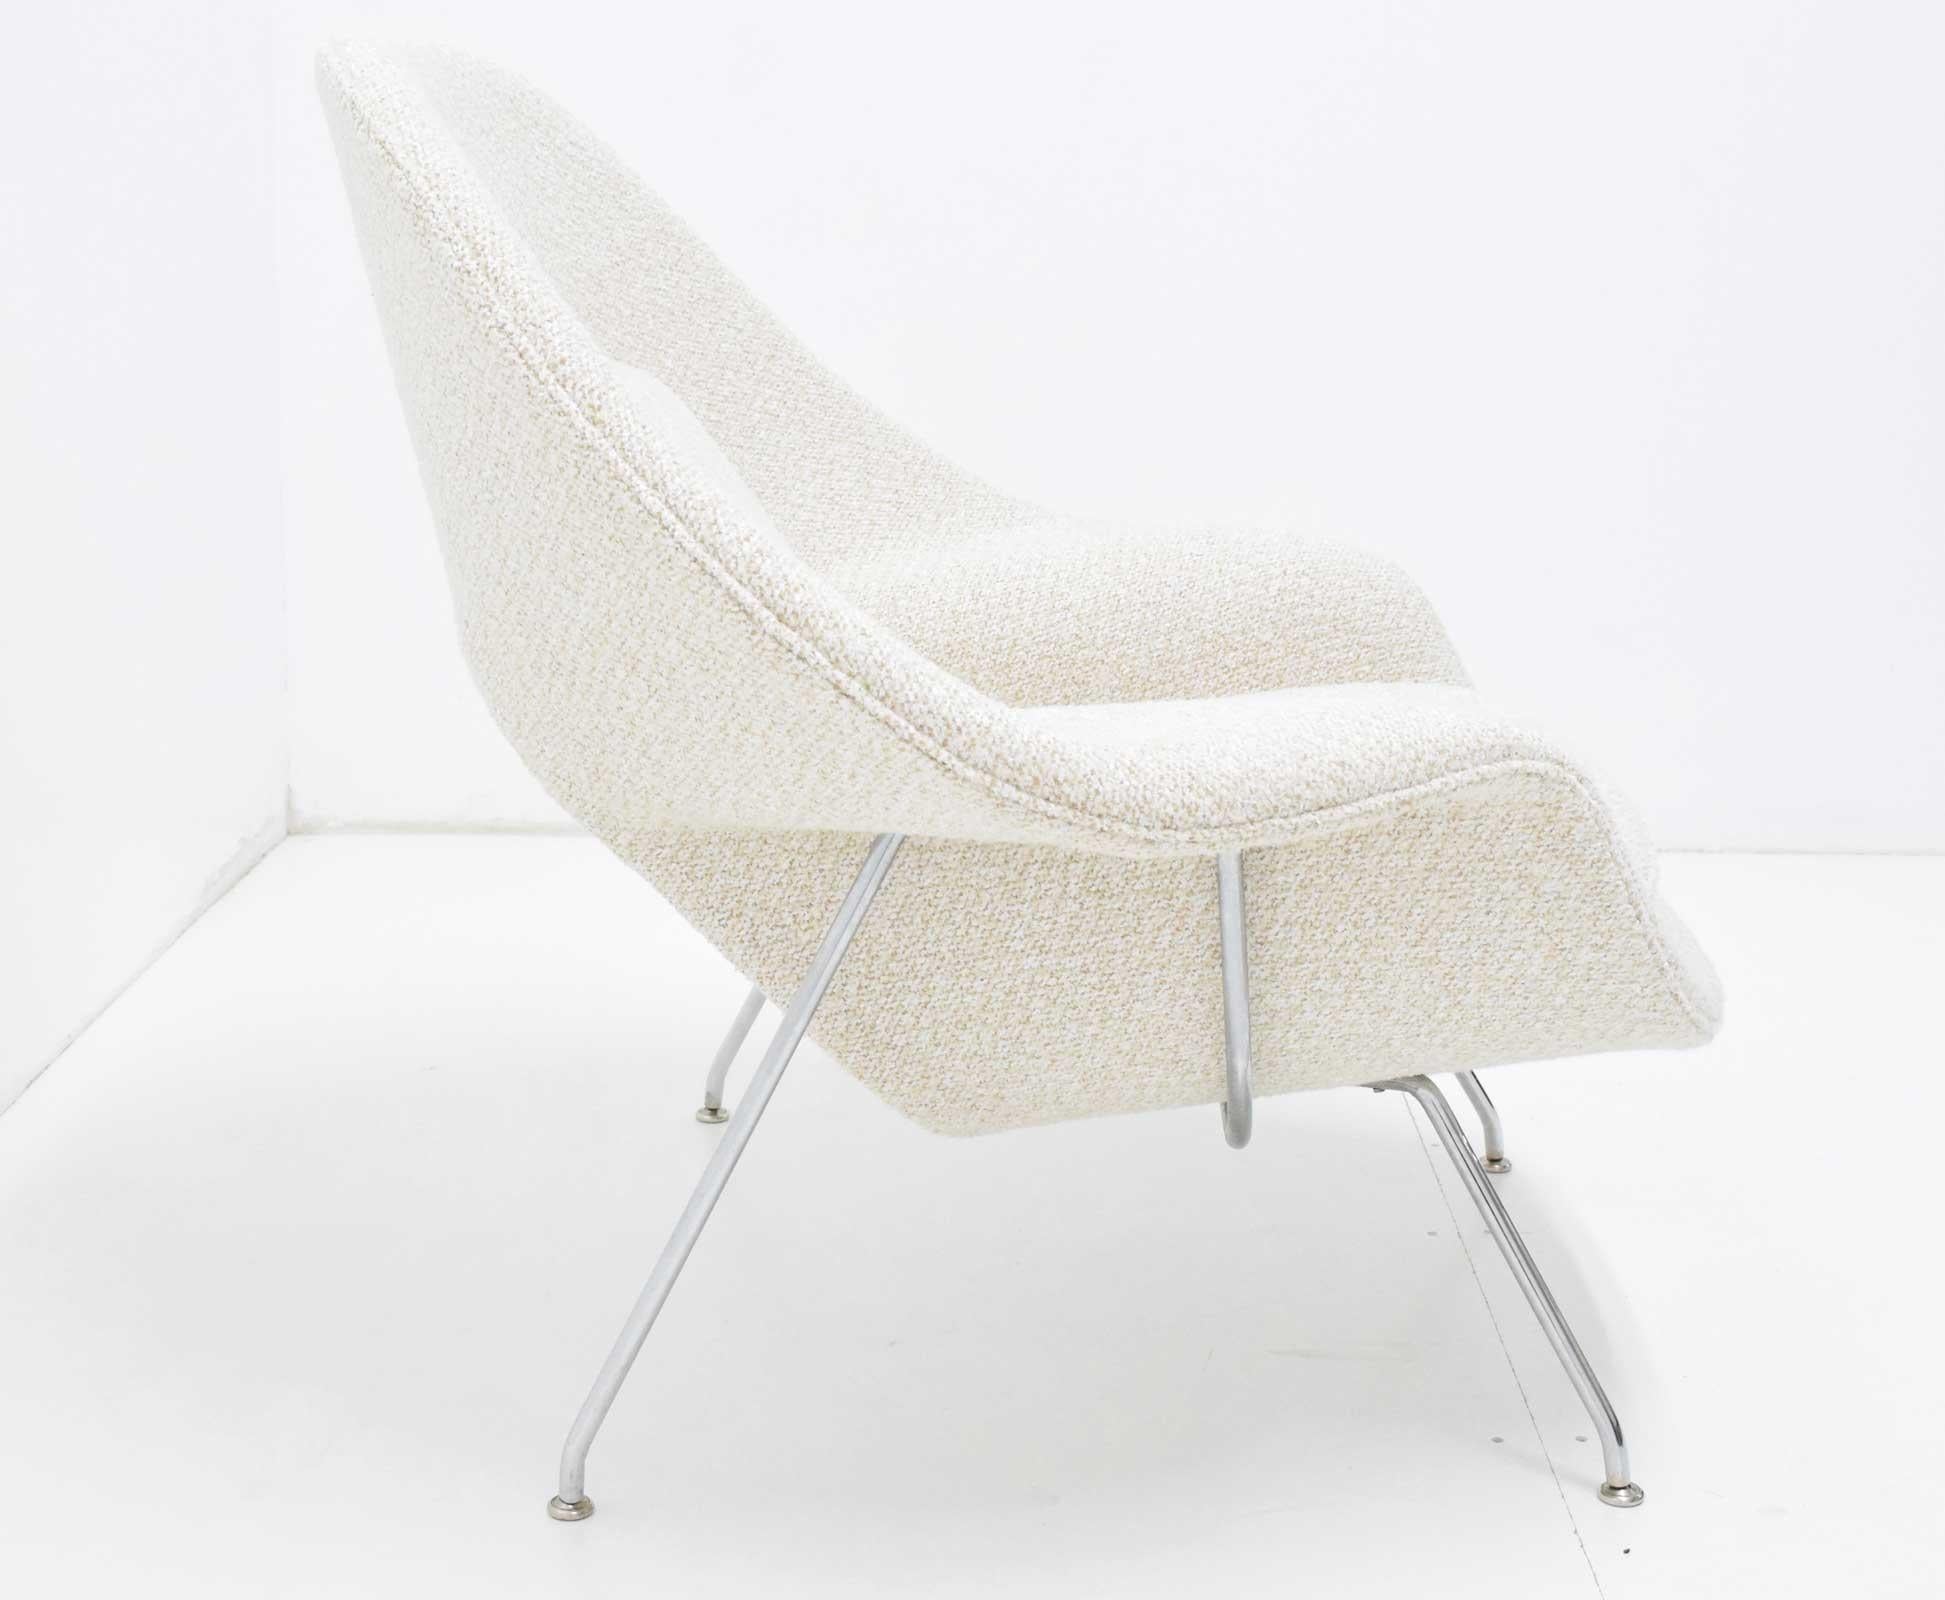 American Eero Saarinen for Knoll Womb Chair and Ottoman